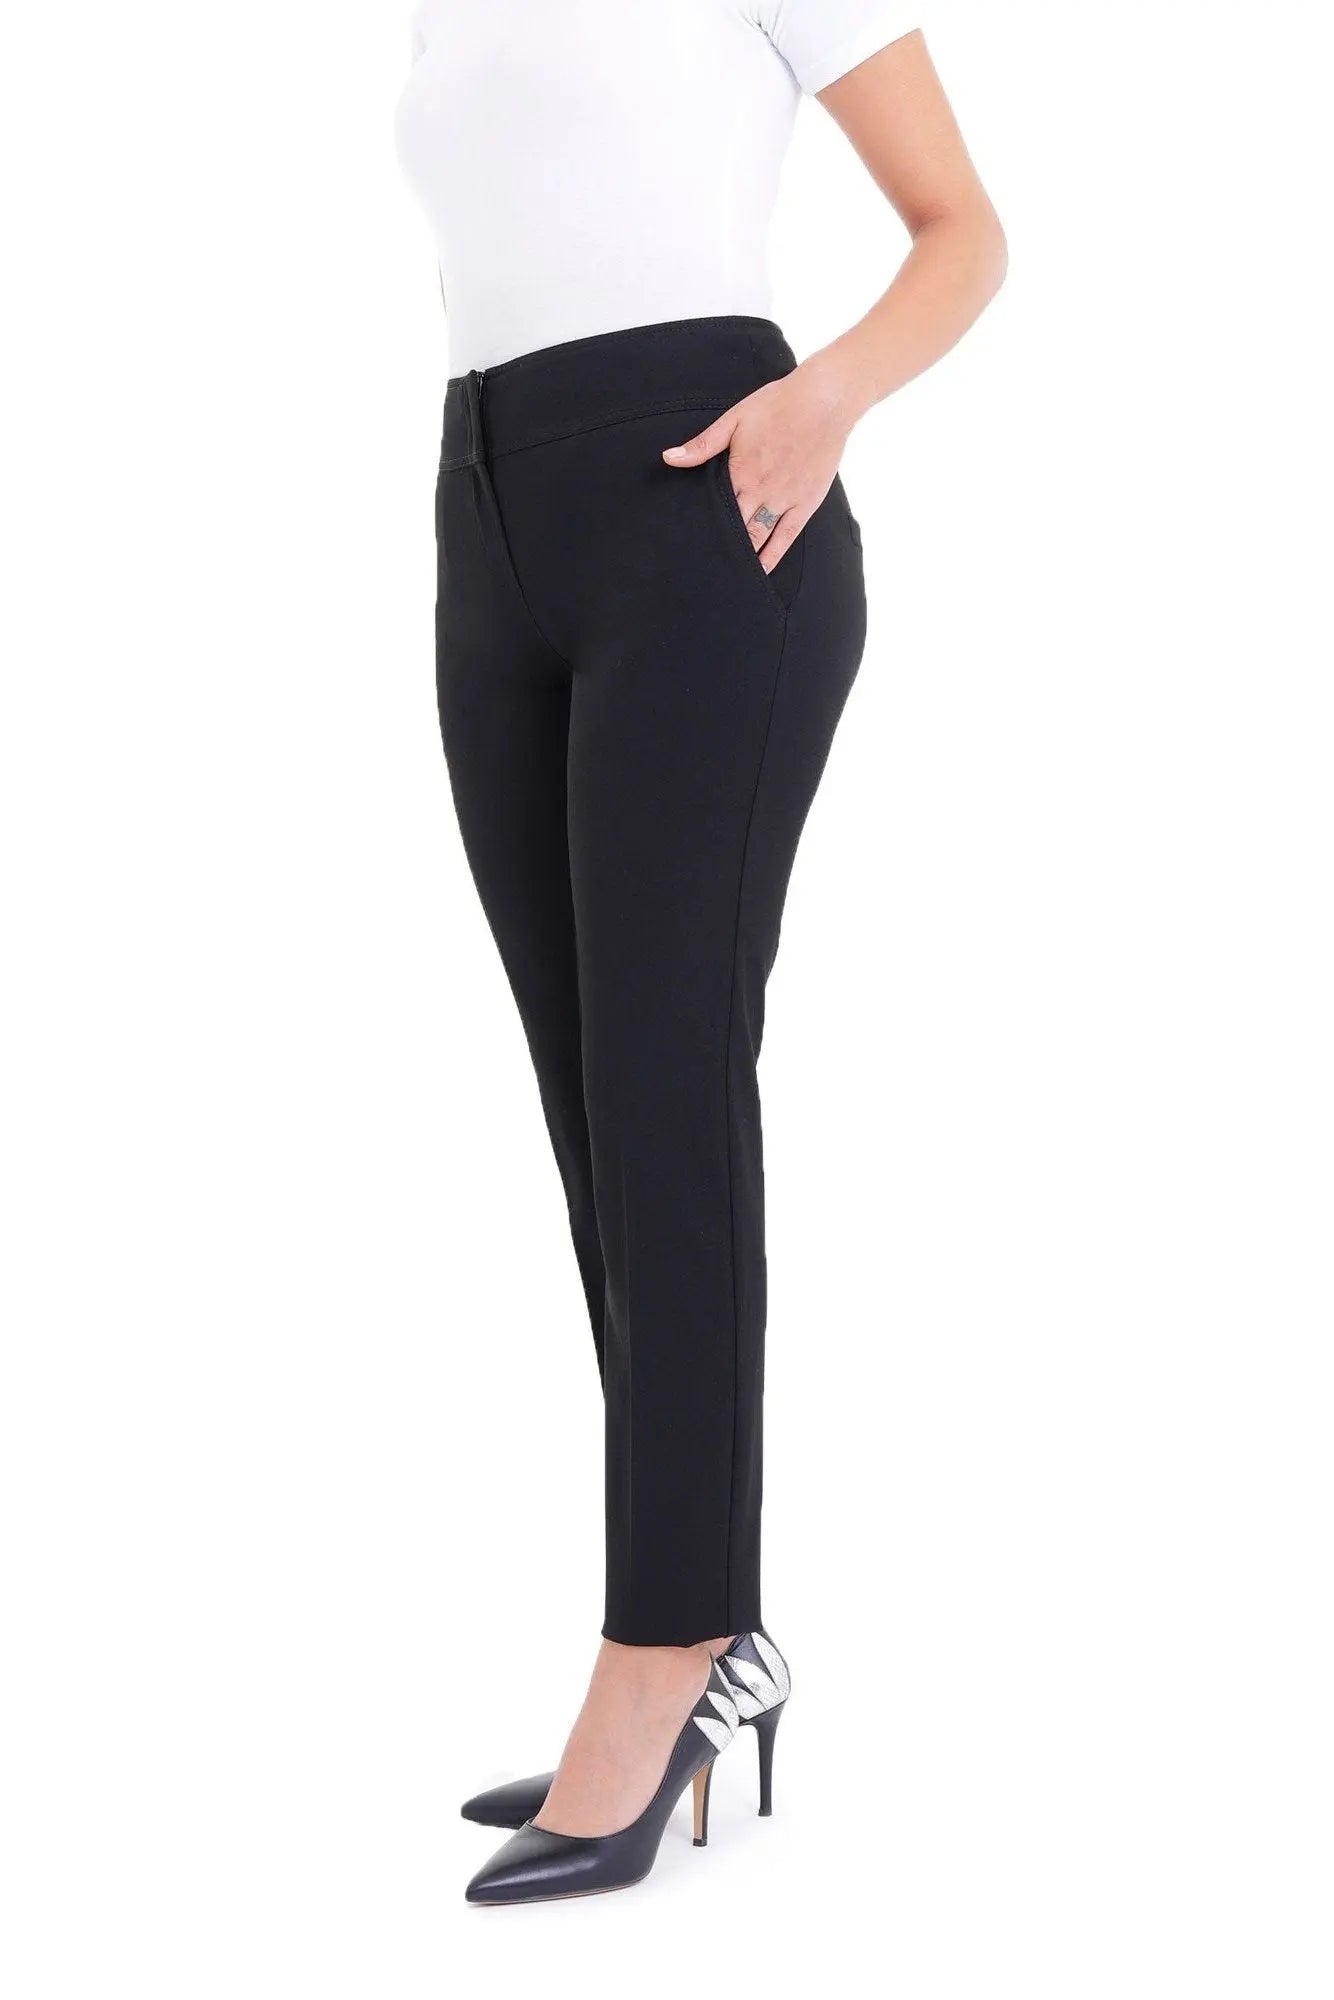 adviicd Casual Pants For Women Loose Fit With Pockets Womens Dress Pants  Women's Elegant Elastic Waist Skinny High Waist Pants Black L - Walmart.com